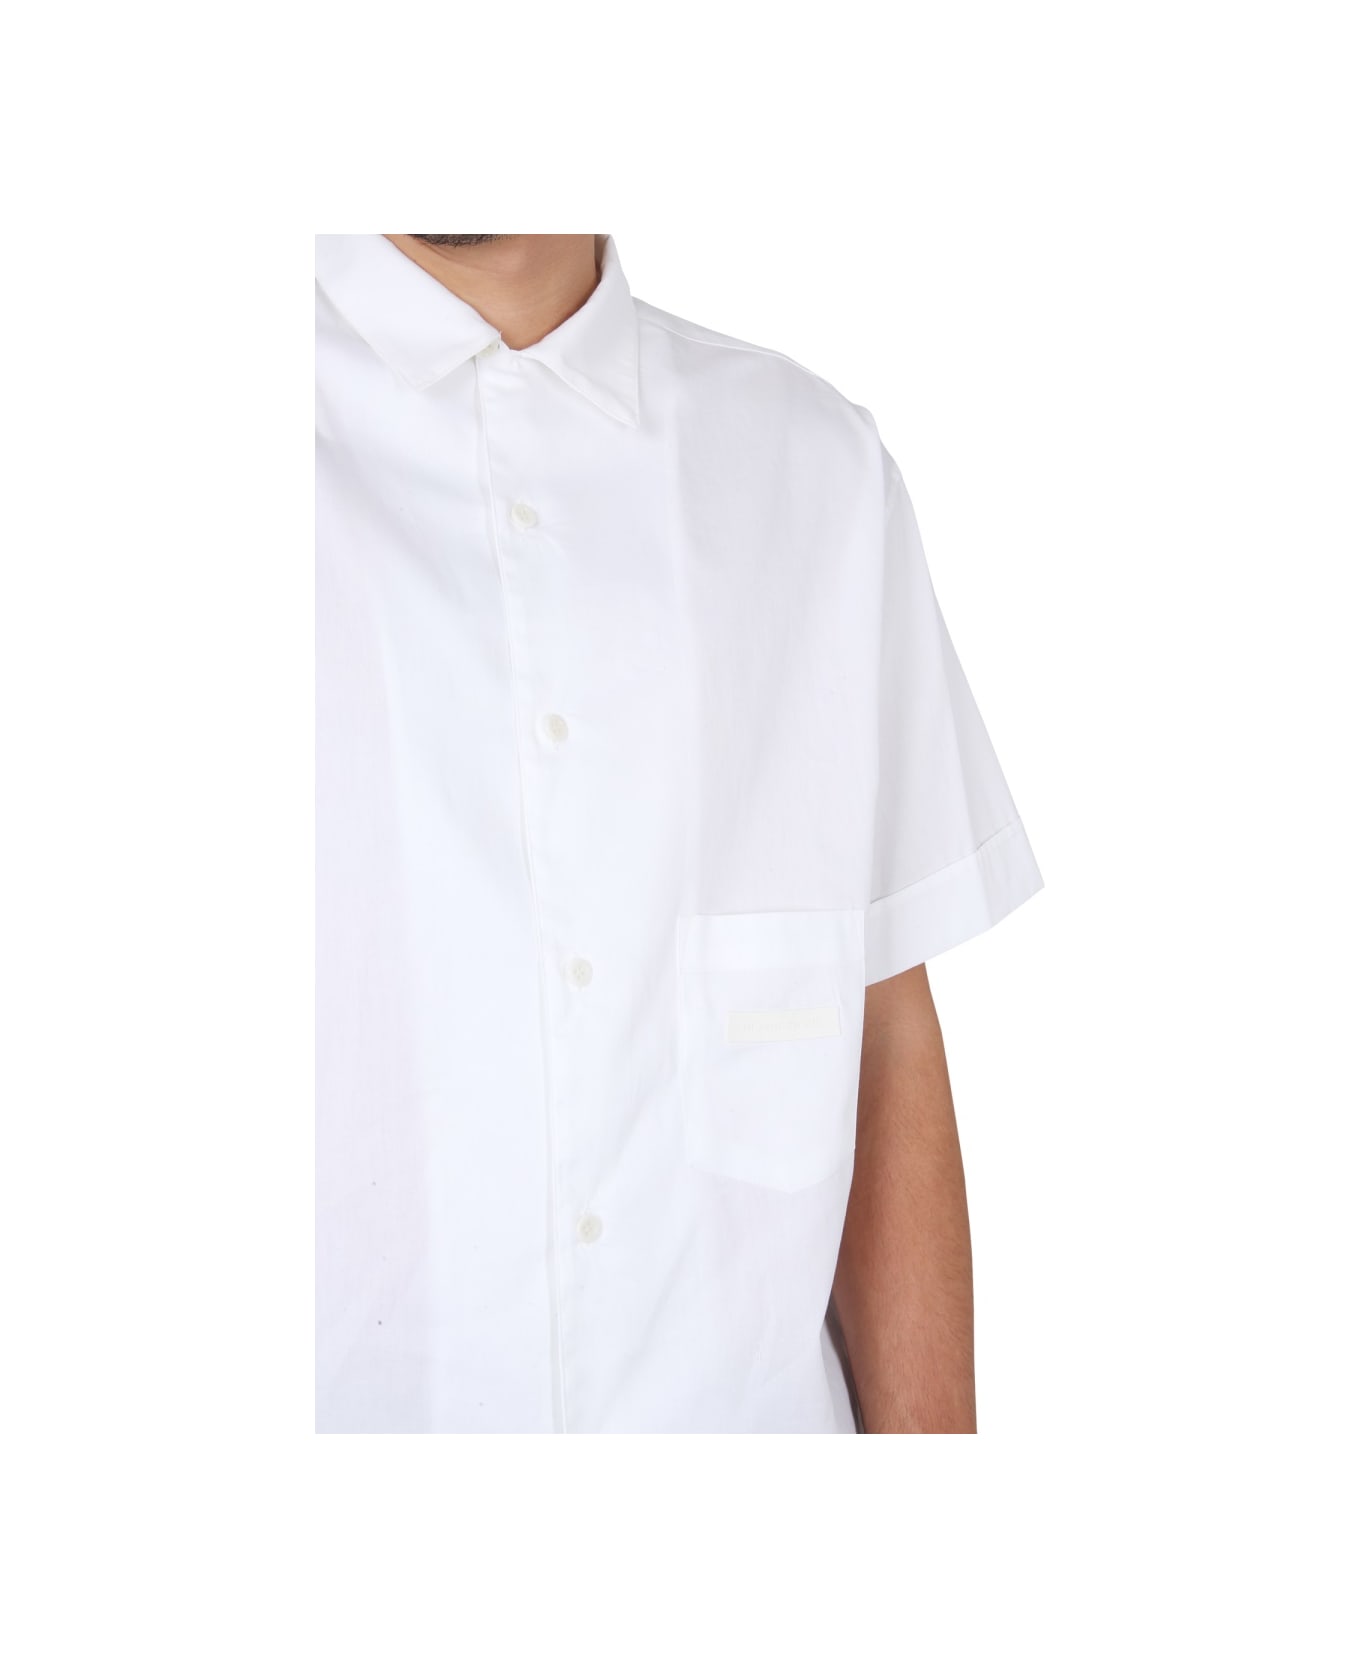 ih nom uh nit Shirt With Pocket - WHITE シャツ